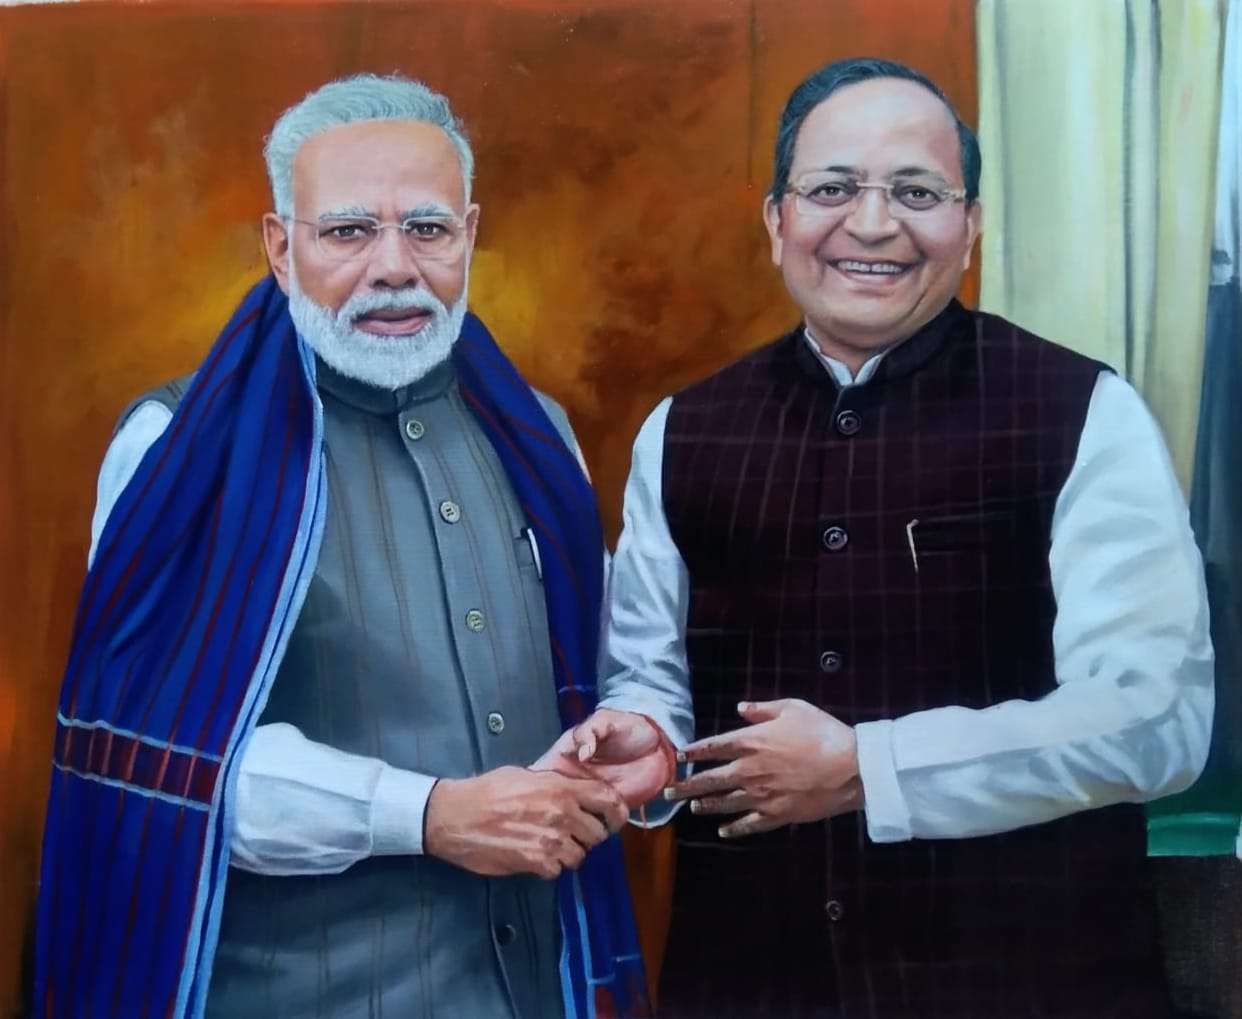 PM Modi, Prime Minister Modi, Narendra Modi with colleague, oil painting, portrait painting, art